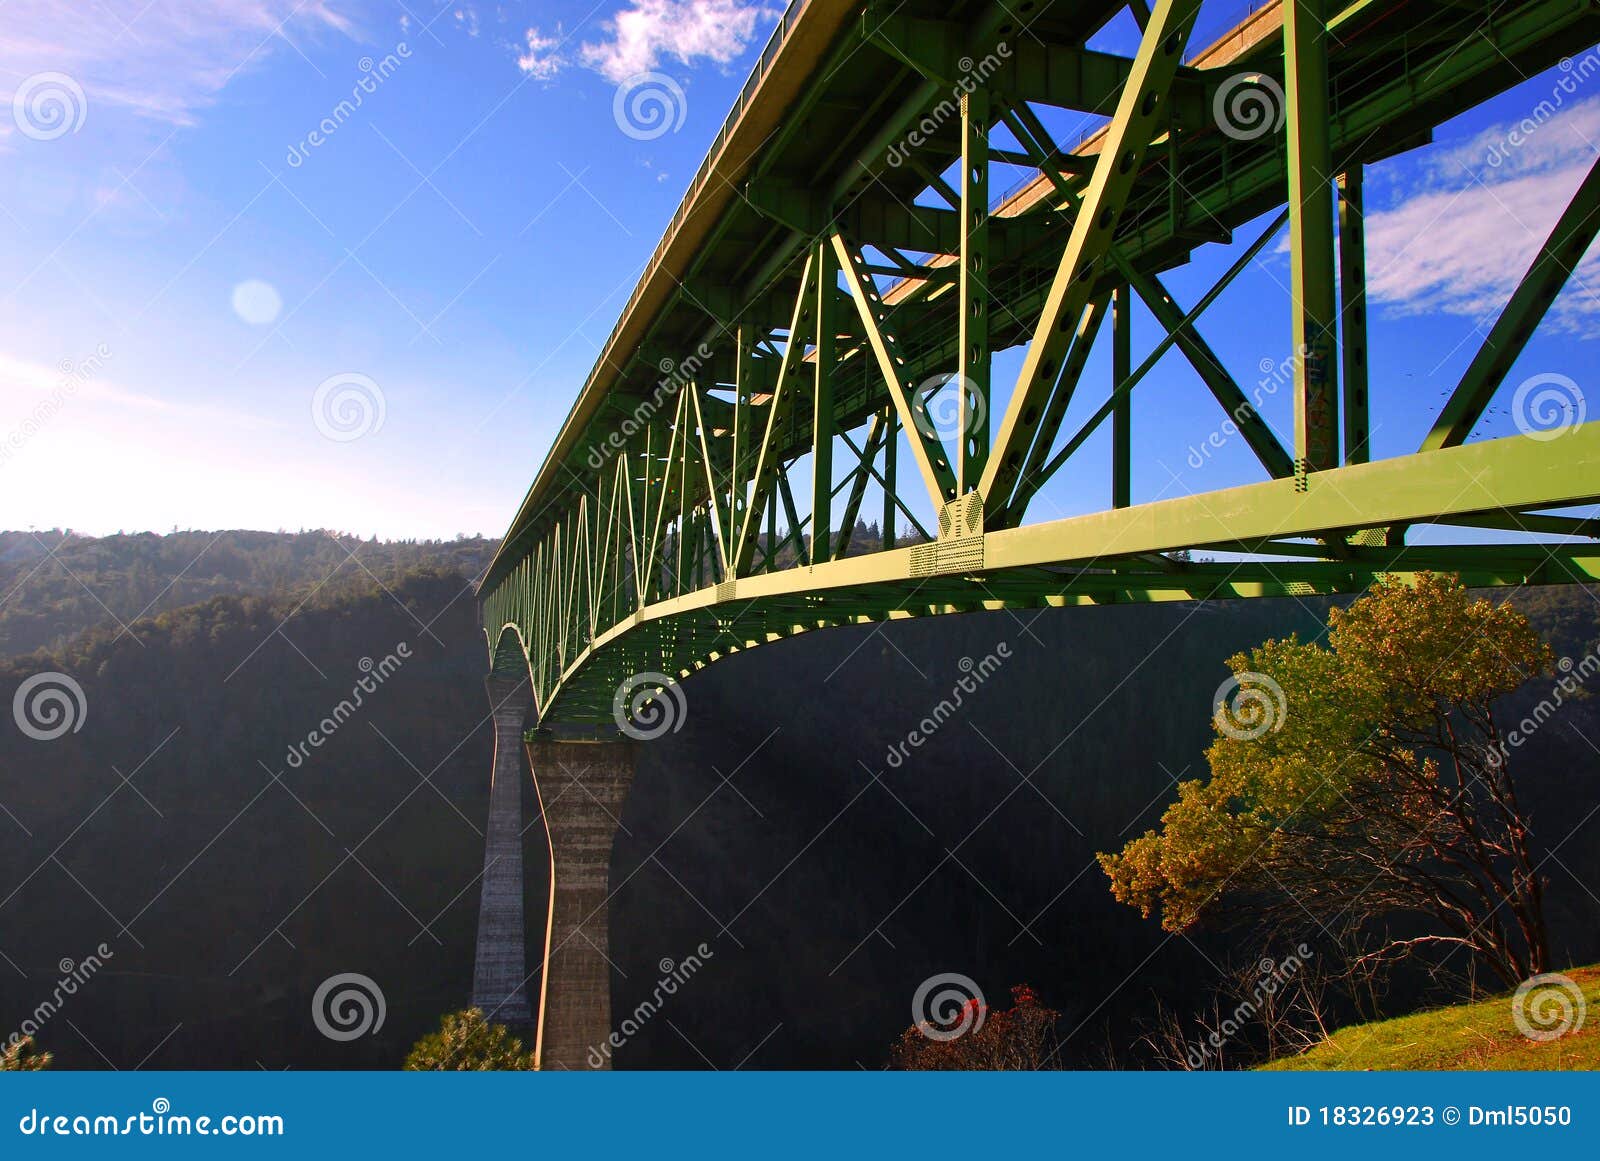 auburn bridge foresthill california highest